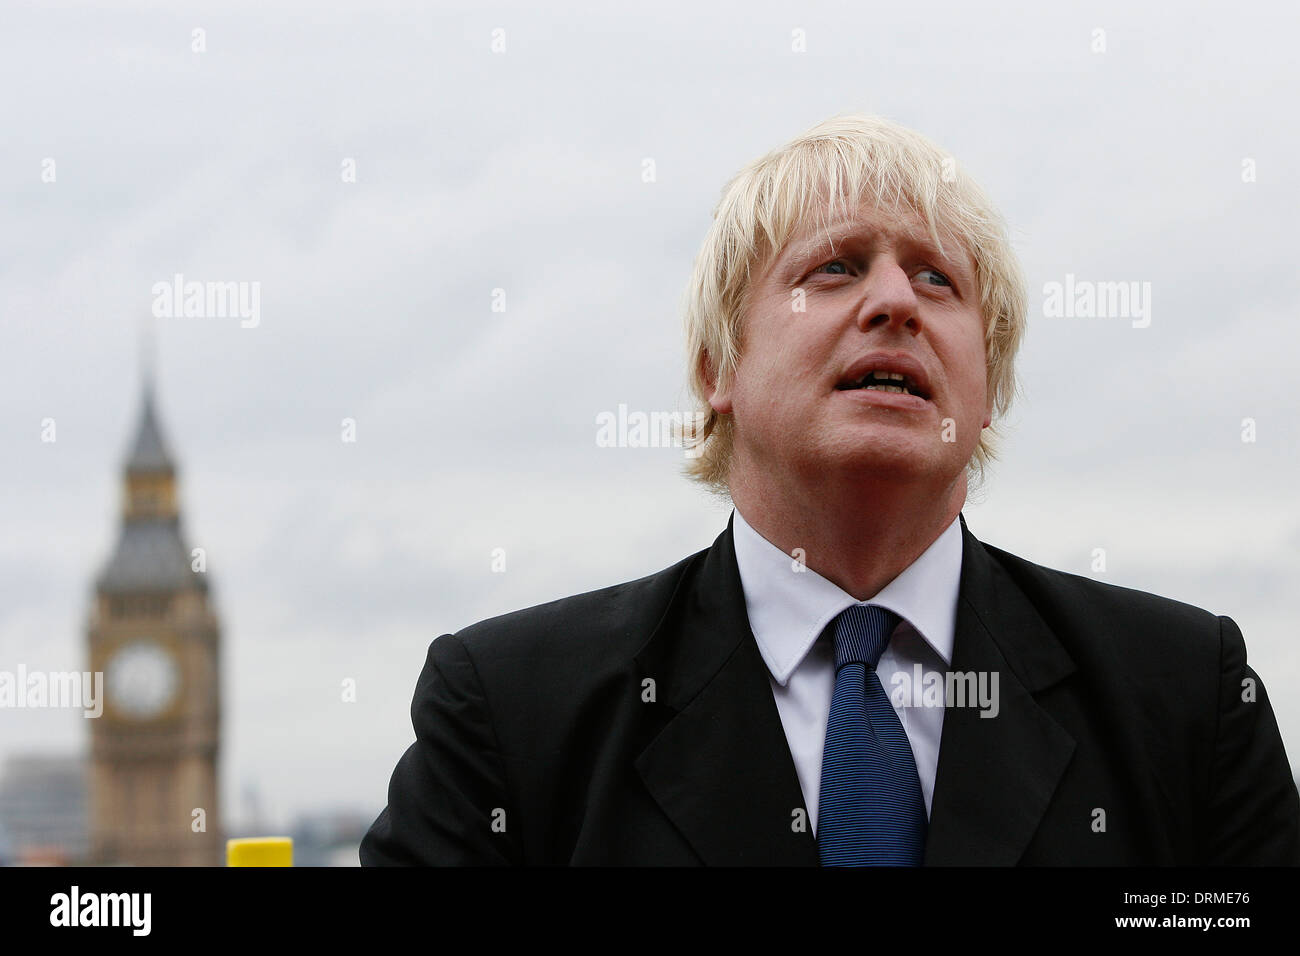 Alcalde de Londres Boris Johnson delante del Big Ben de Londres Foto de stock